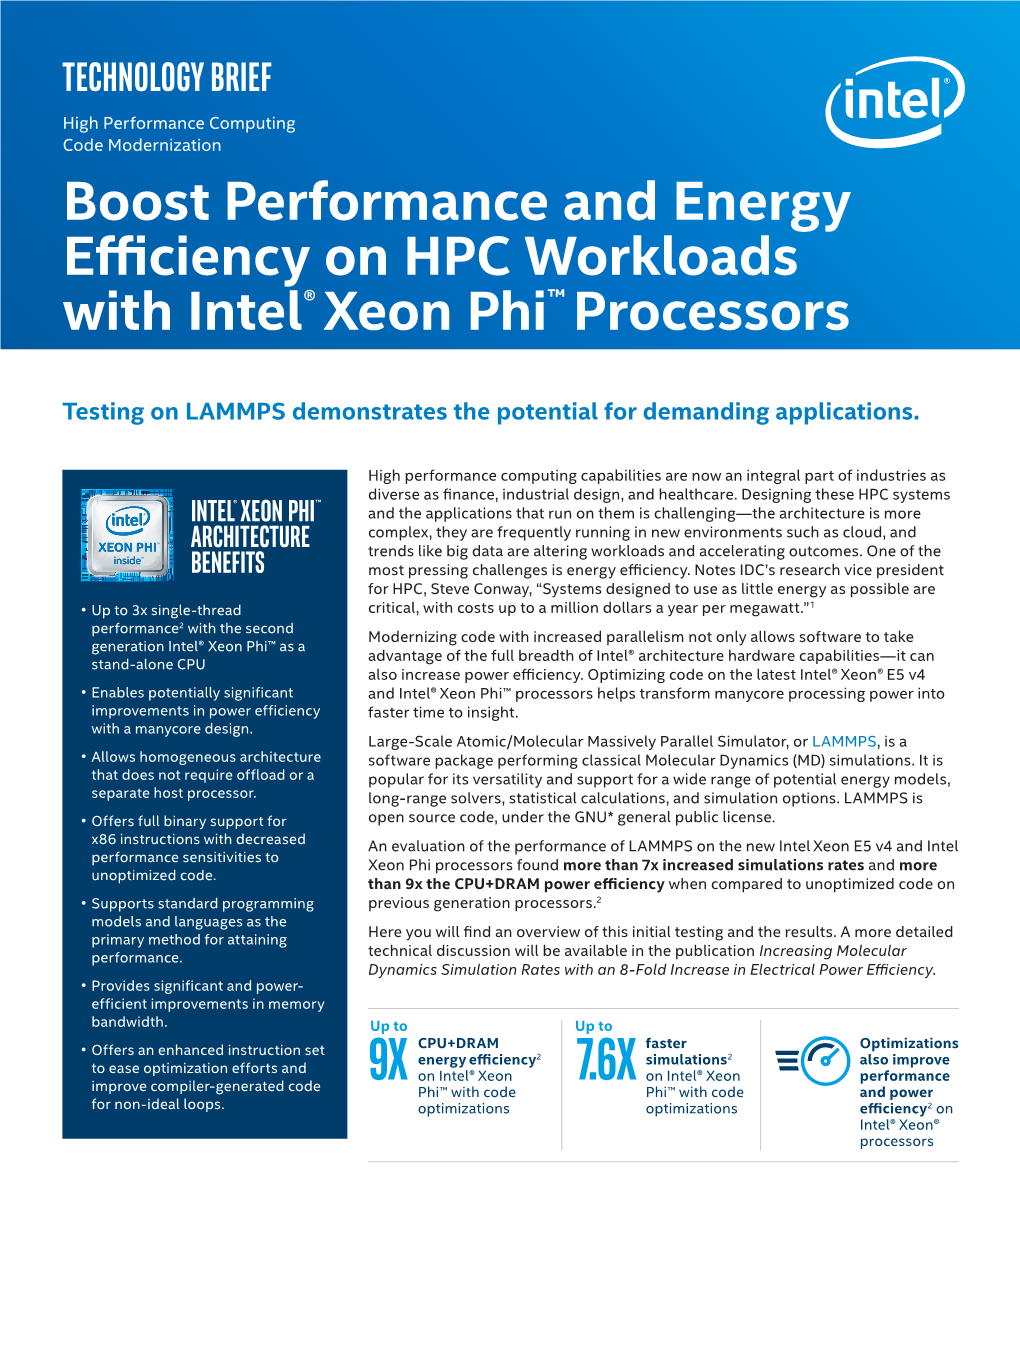 Intel® Xeon Phi™ Architecture Benefits